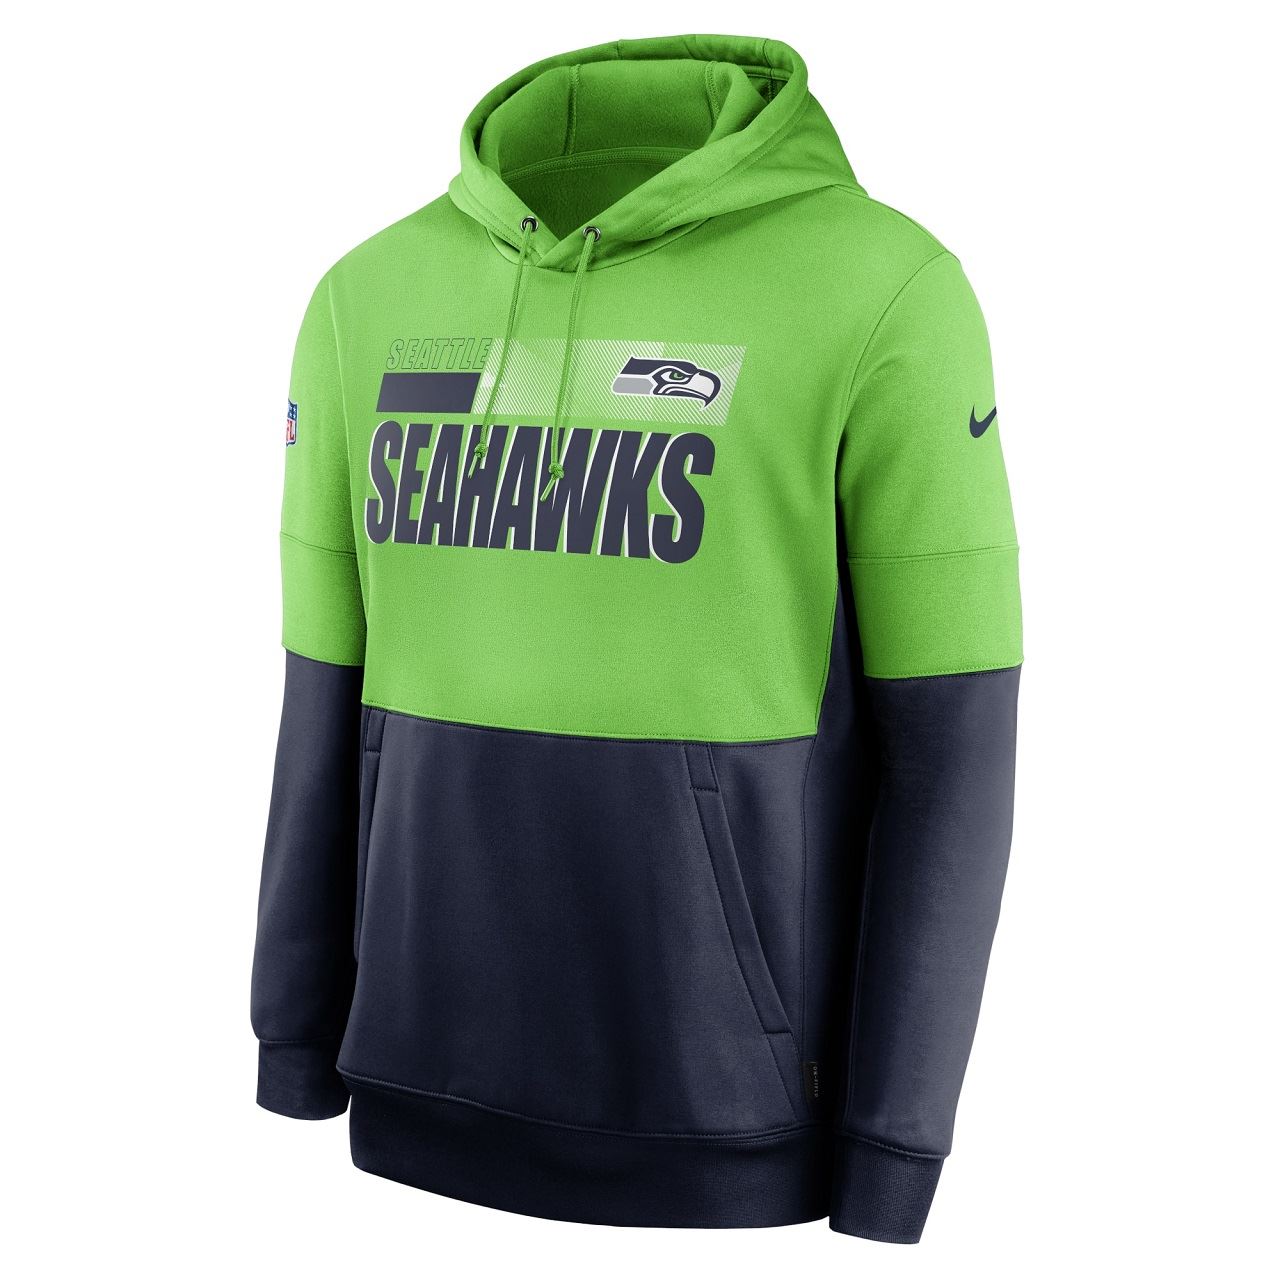 Seattle Seahawks NFL Team Name Lockup Therma Pullover Green / Navy Hoody Nike